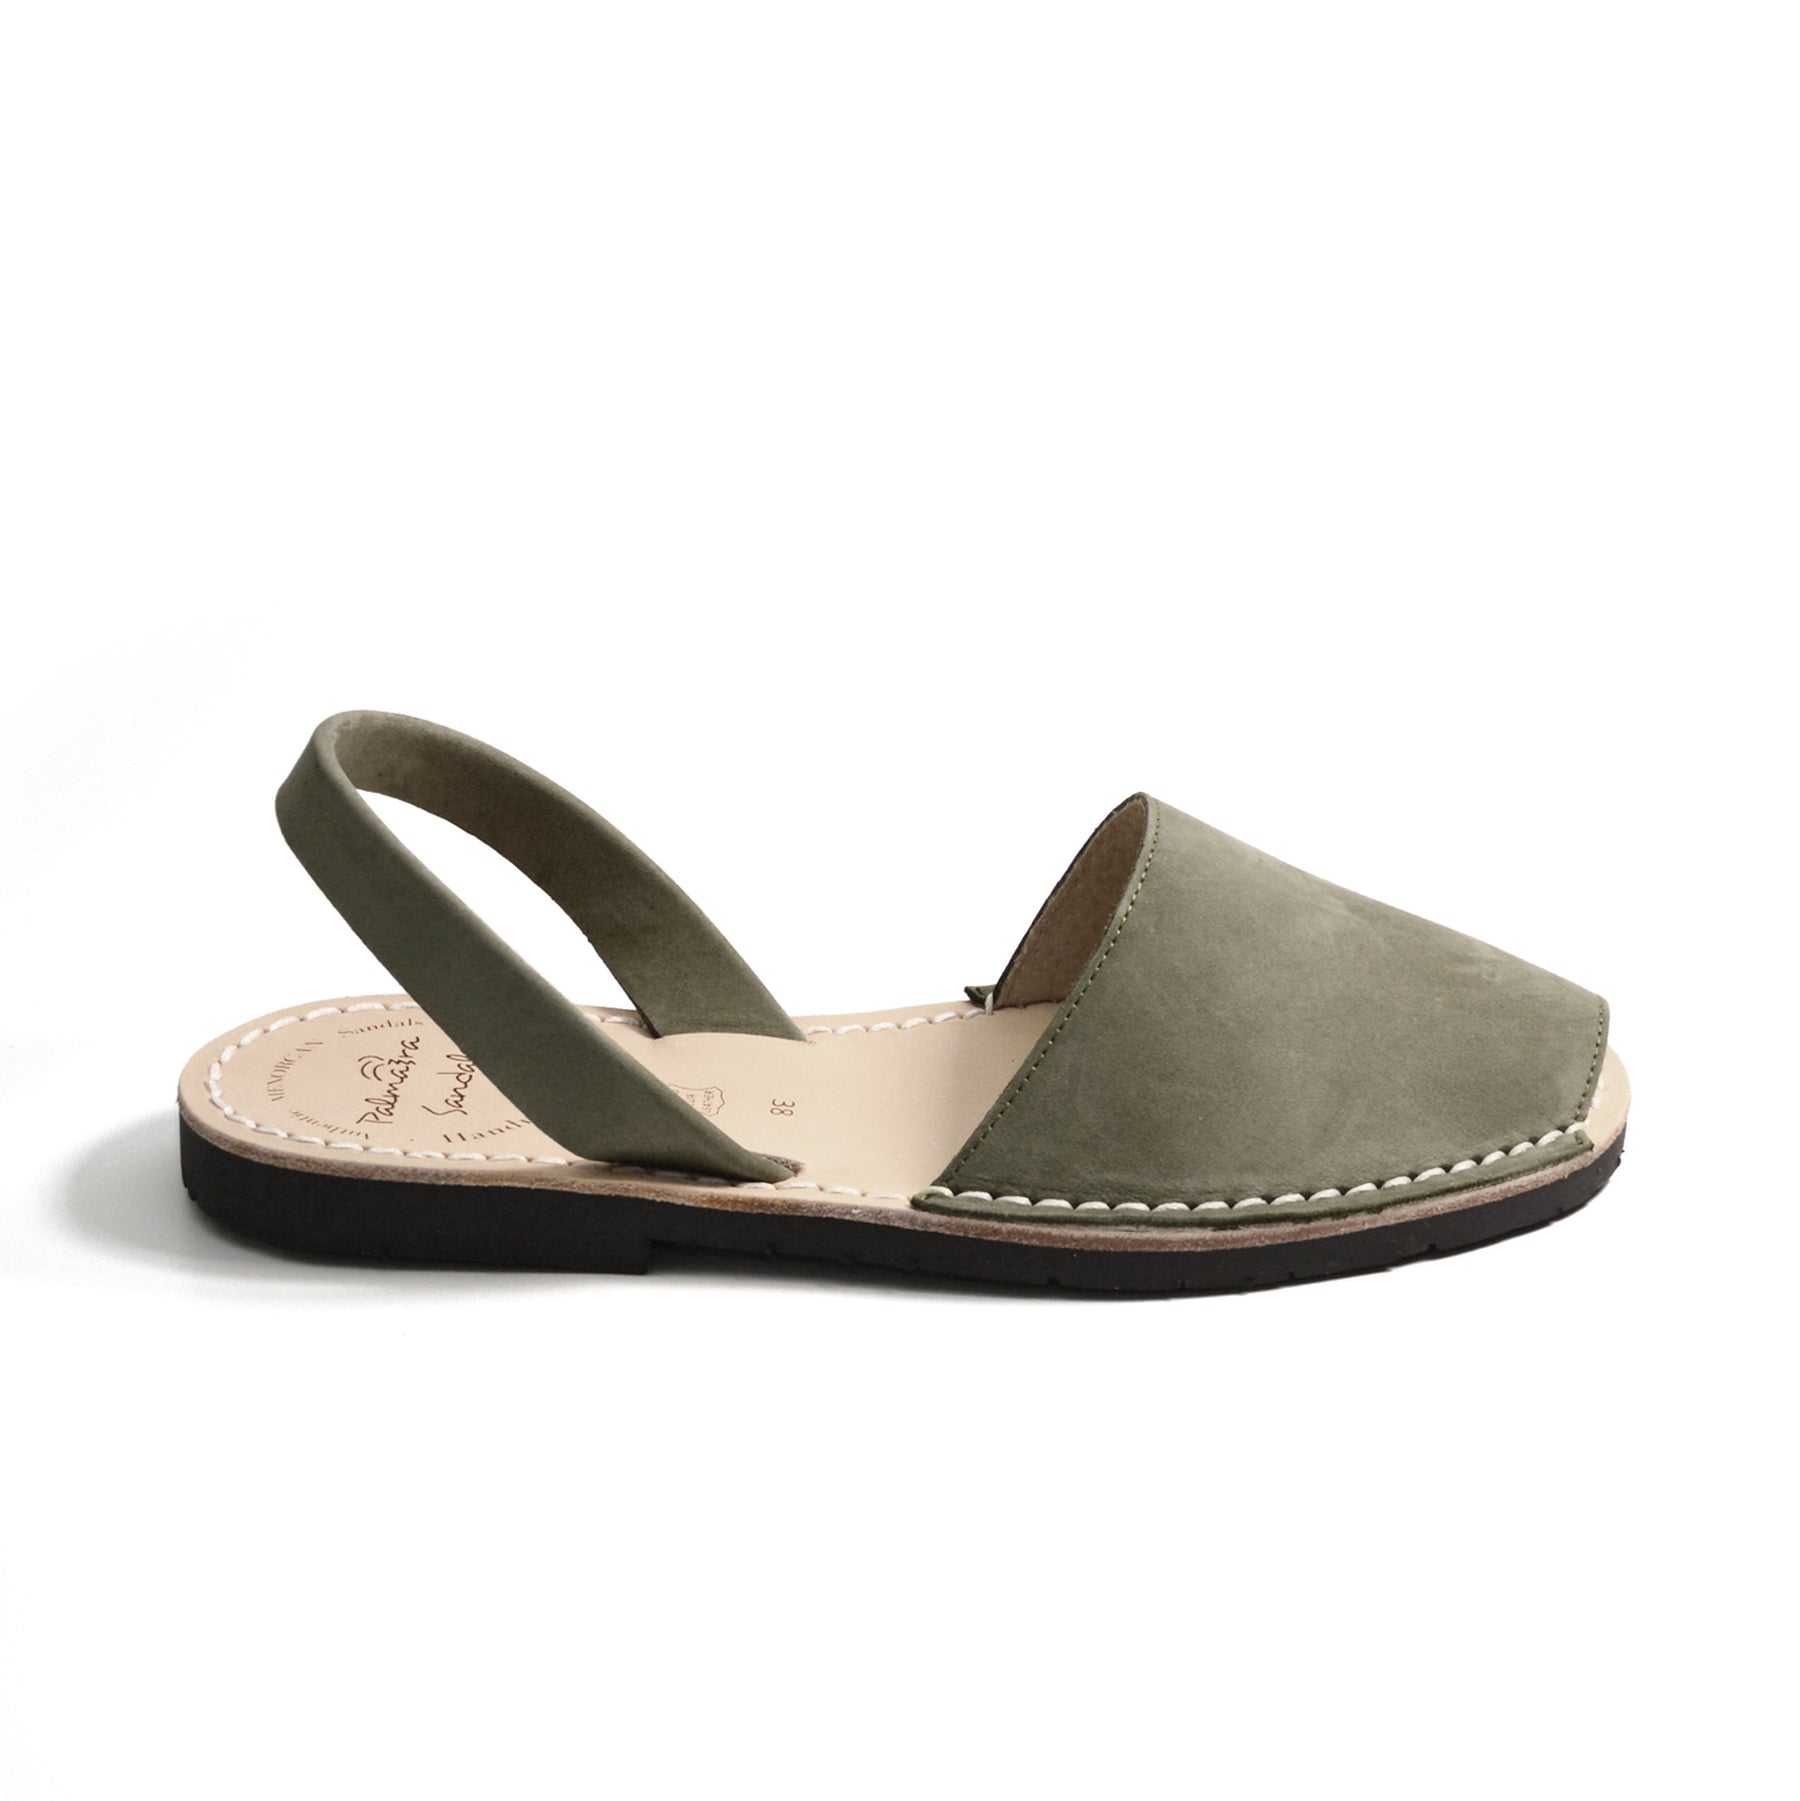 Khaki nubuck leather spanish menorcan avarcas sandals